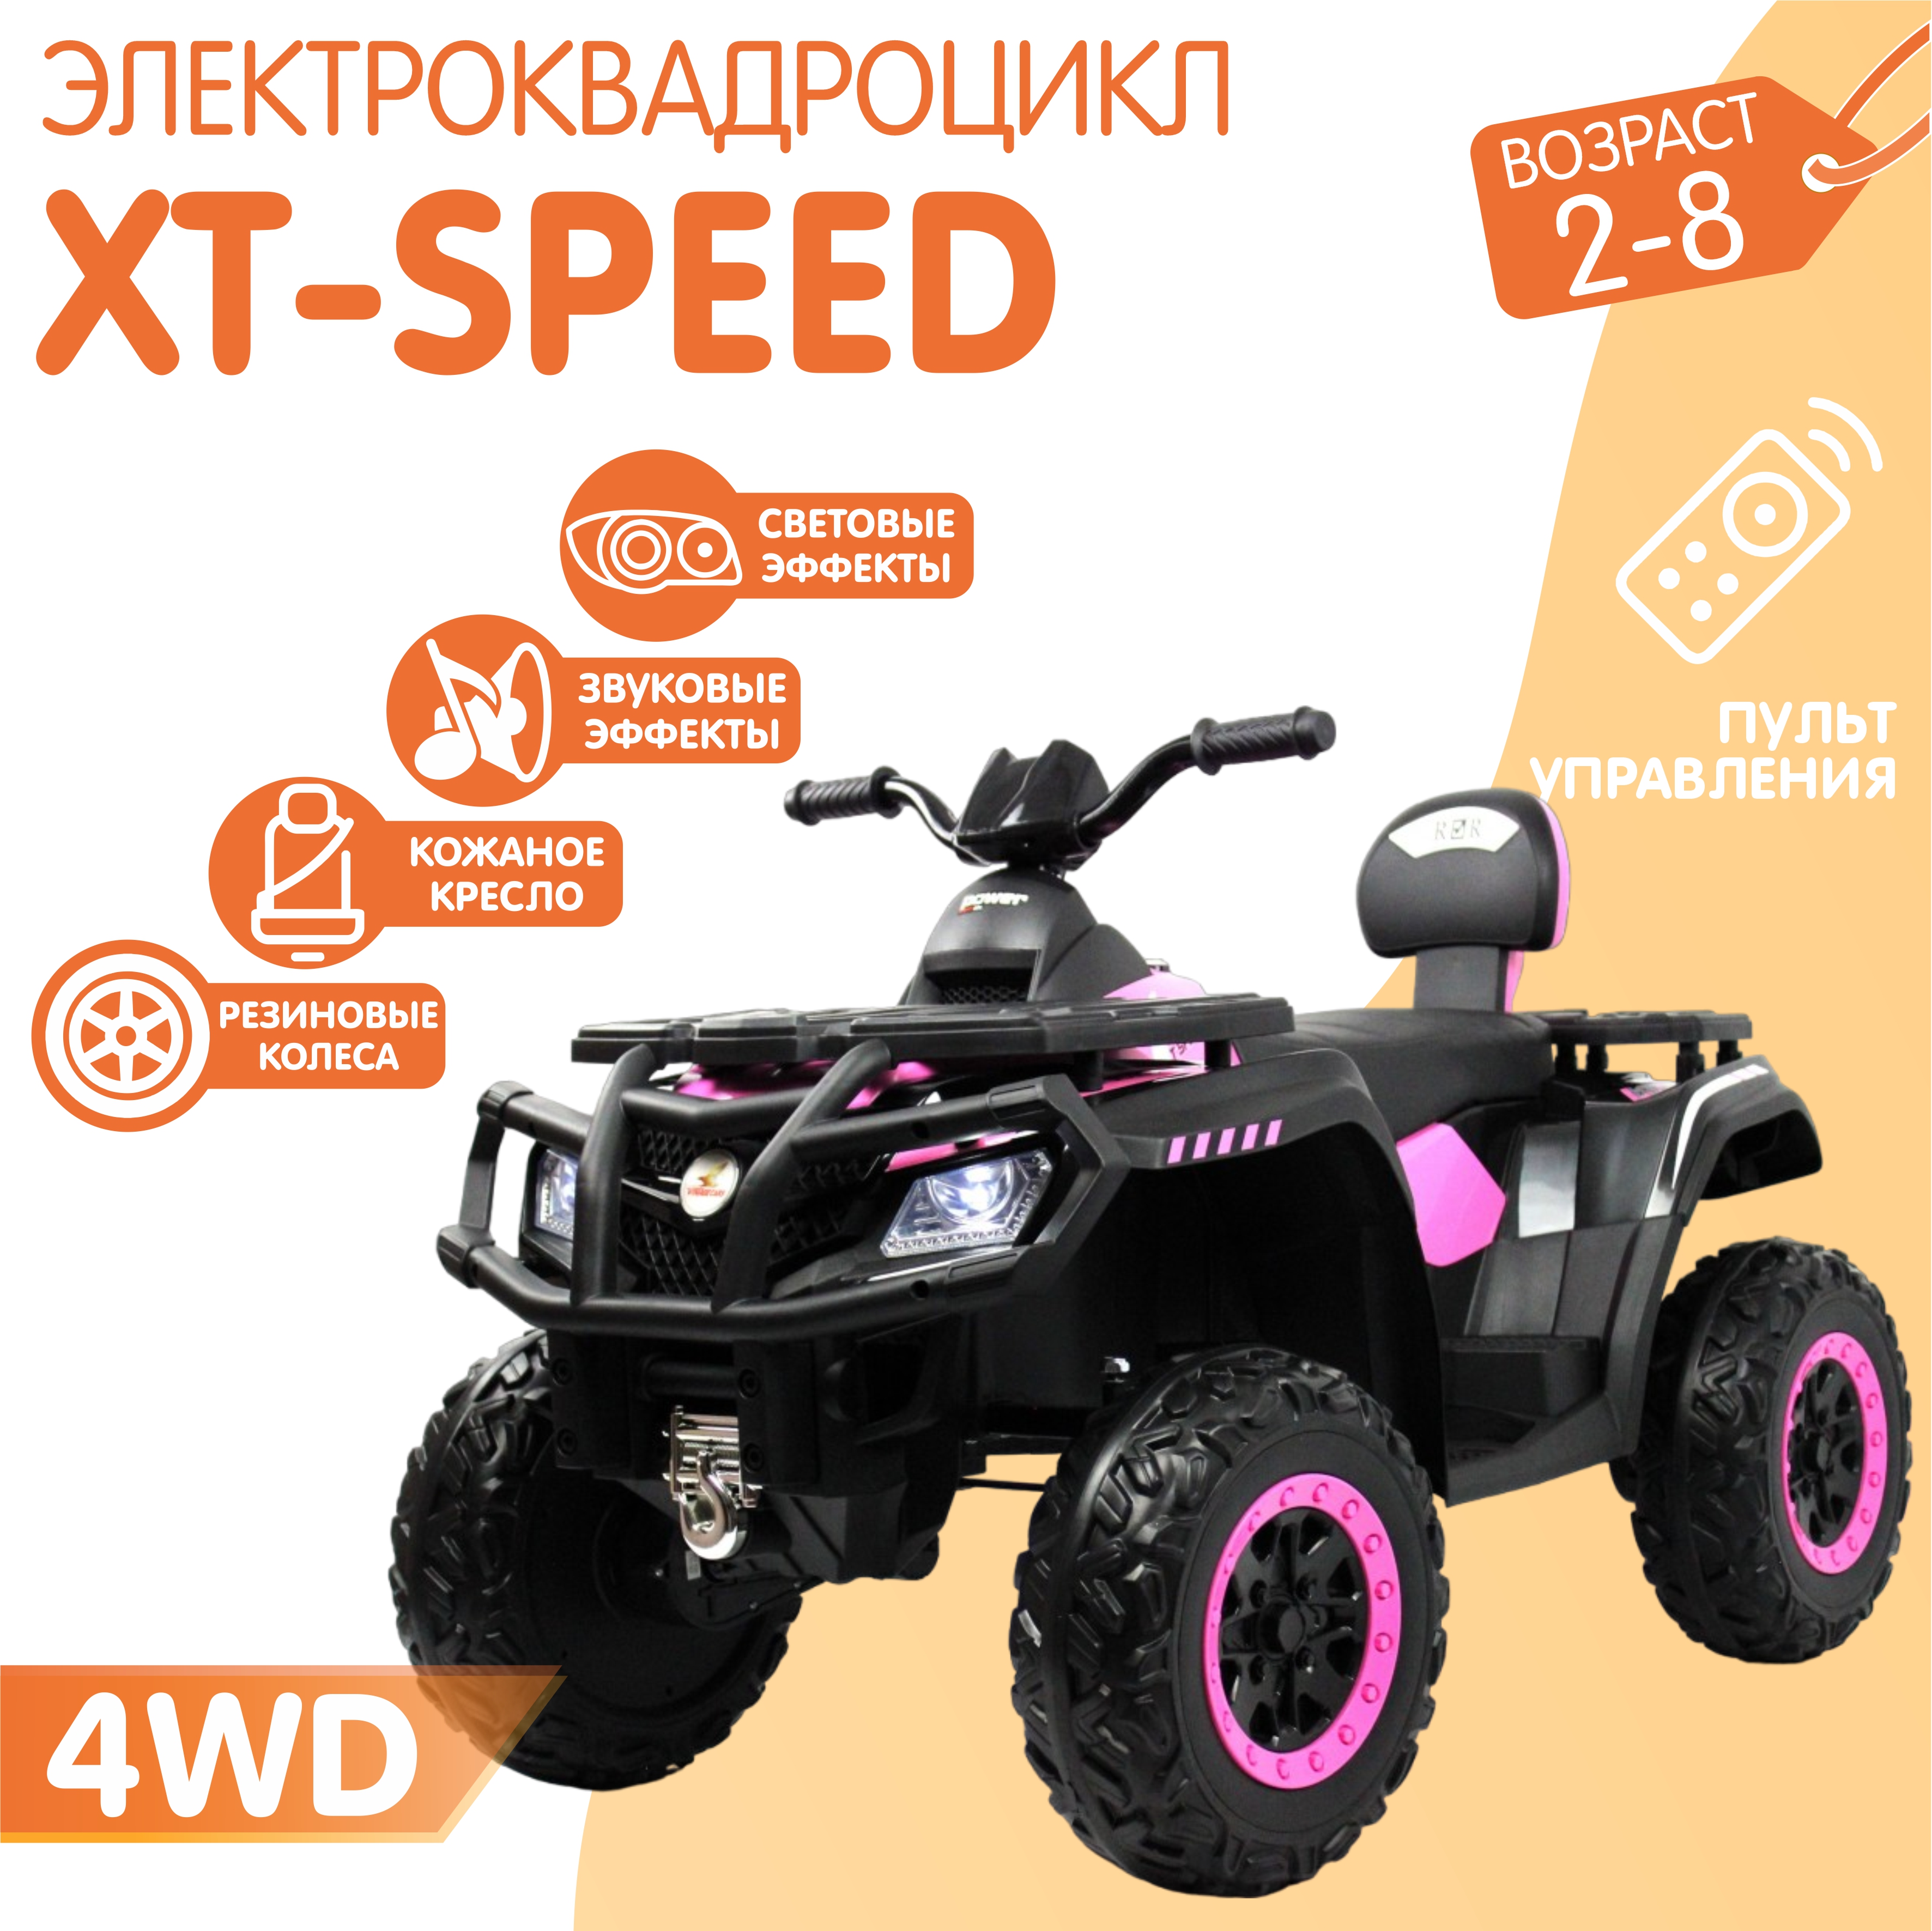 Электромобиль NOVAKIDS квадроцикл xt-speed 4wd розовый + пульт